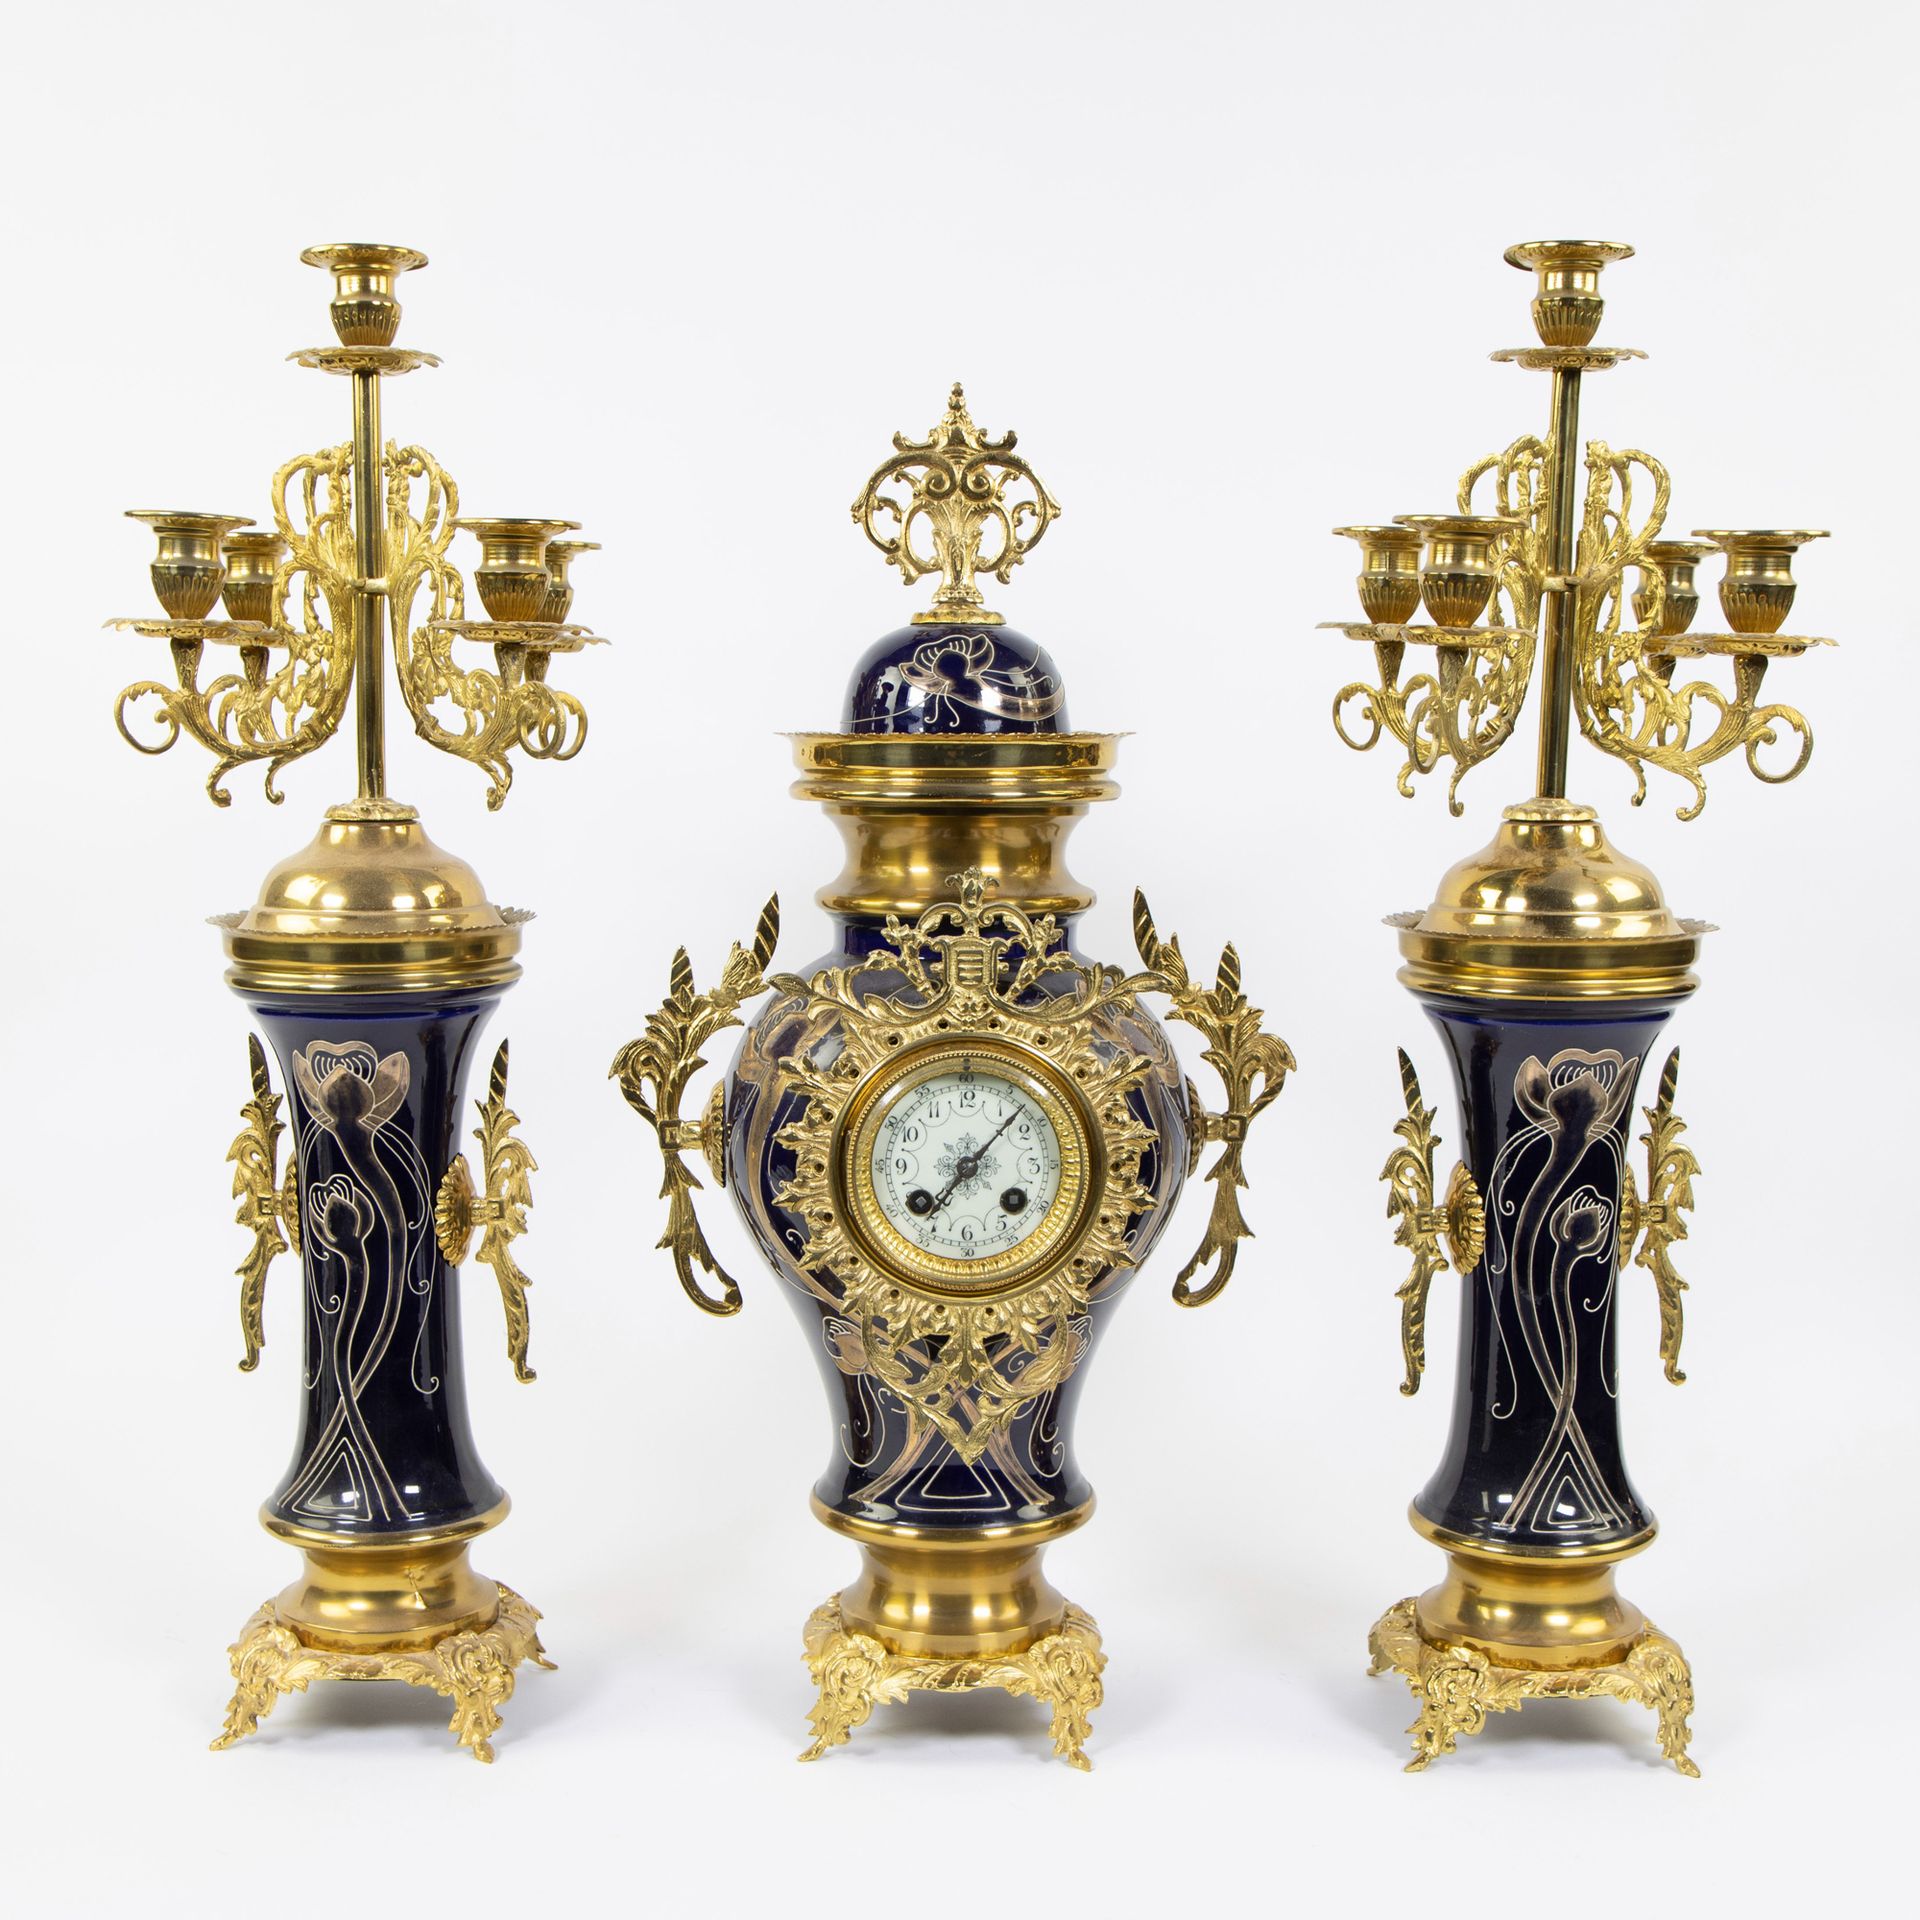 Null 三件装饰有风格化的鞭子图案和镀金铜，烛台有5个照明点，约1900年
Driedelige faience garnituur versierd met&hellip;